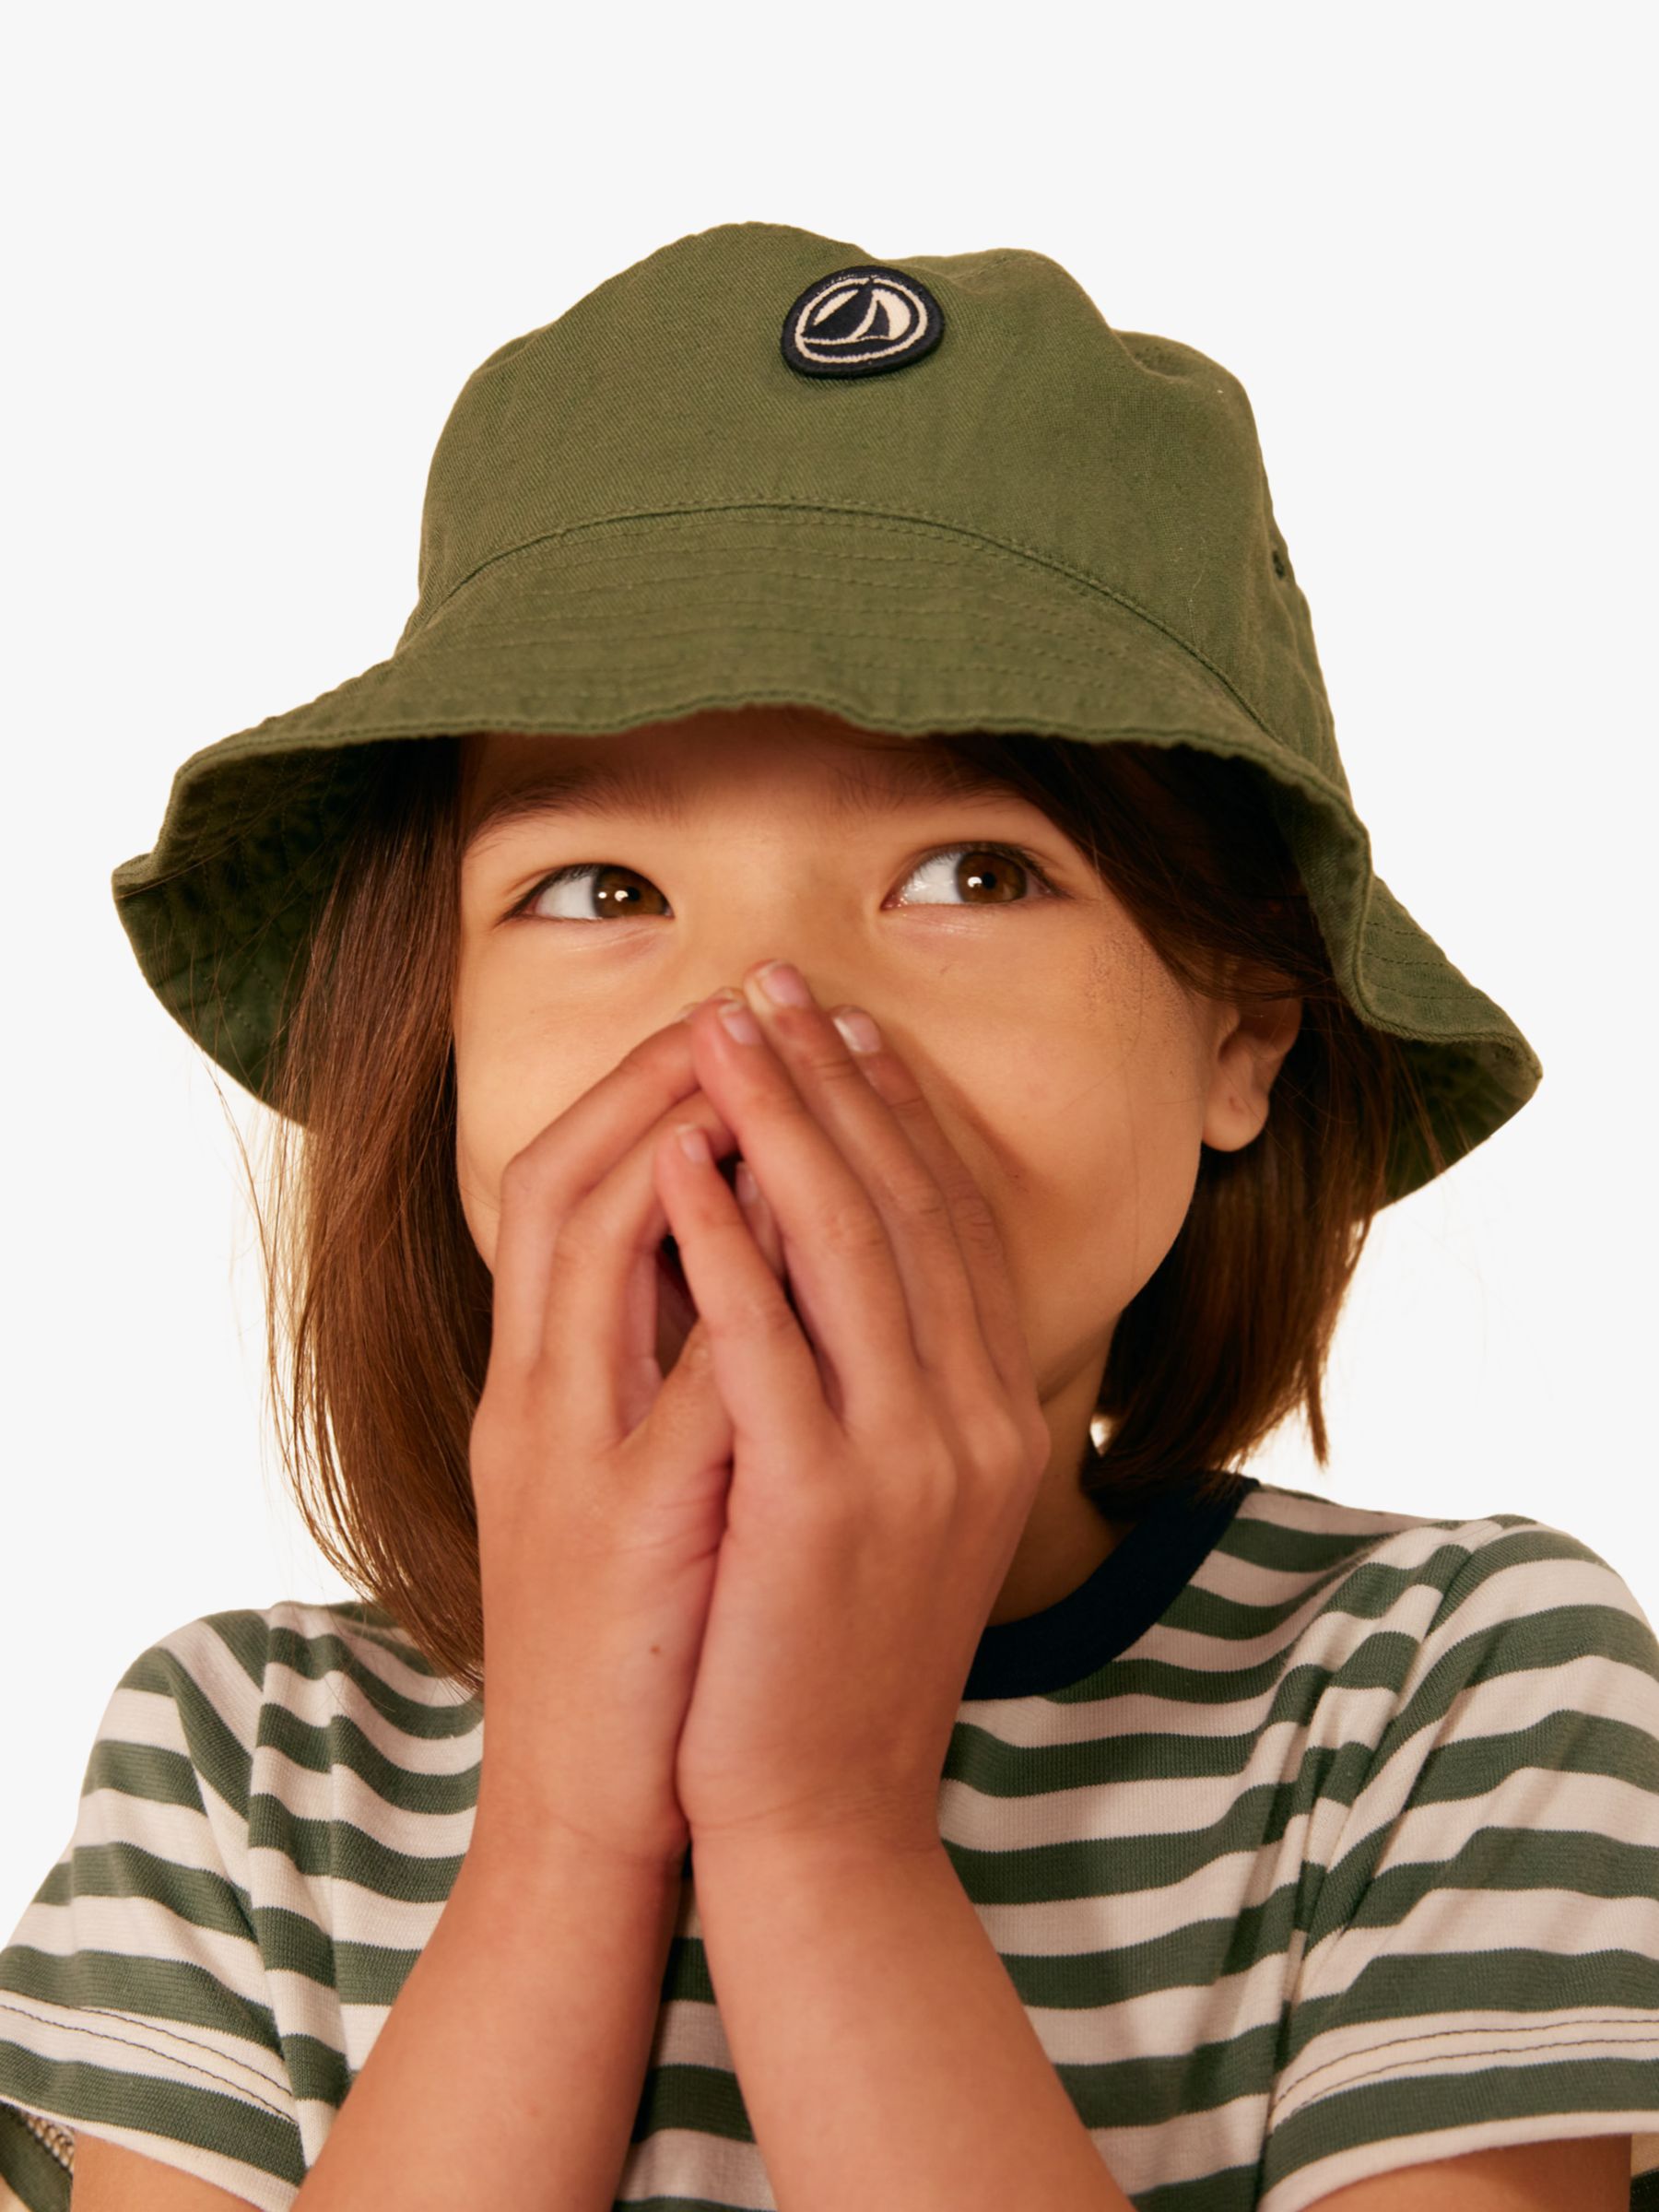 Petit Bateau Kids' Logo Solid Bucket Hat, Croco, 6-8 years